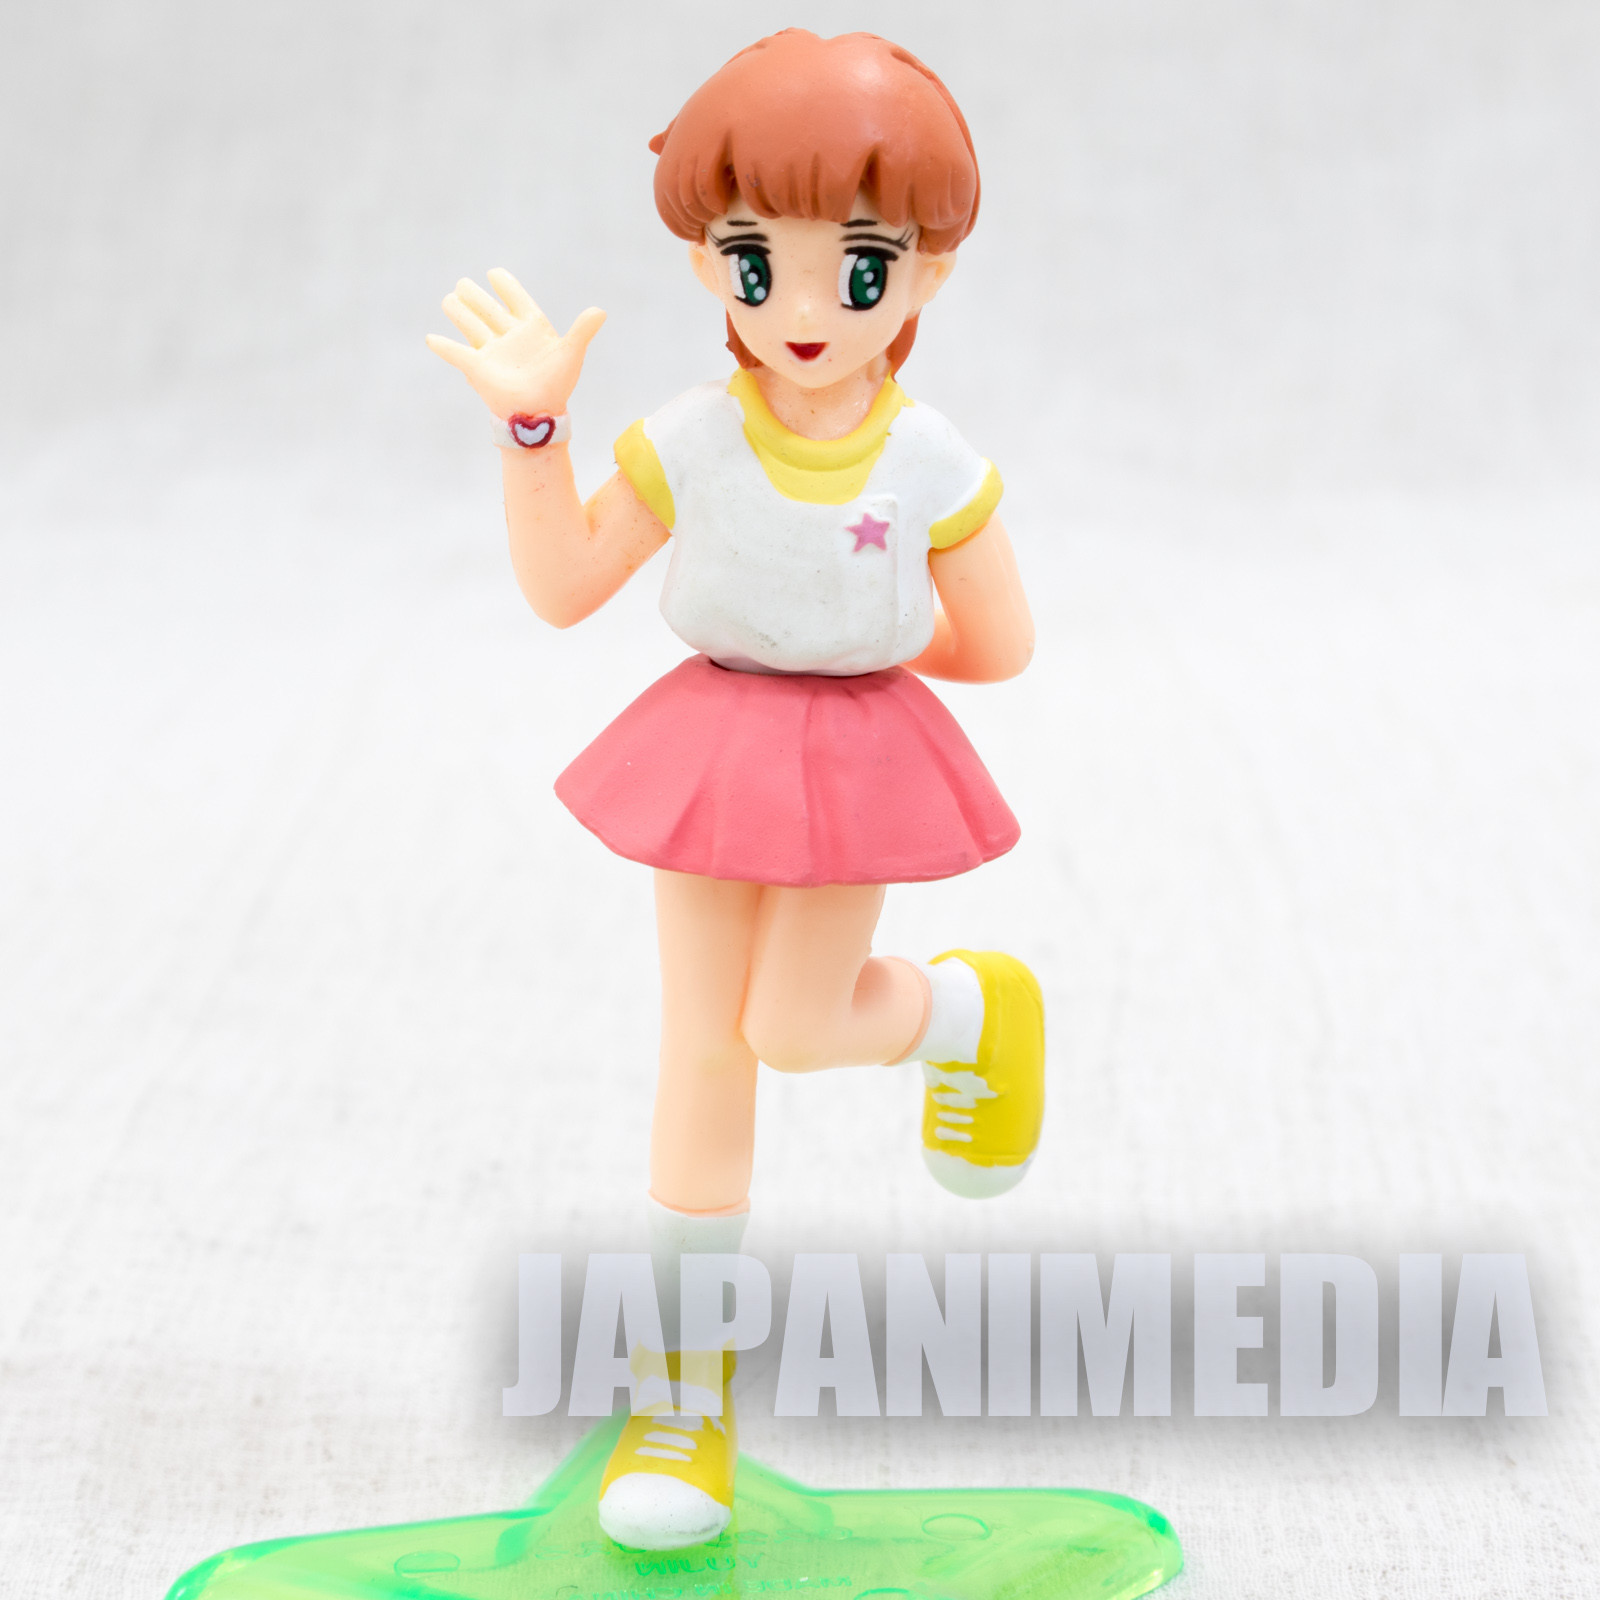 Magical Emi, Magical Star Mai Kazuki Magical girl Collection Mini Figure Part 2 JAPAN ANIME